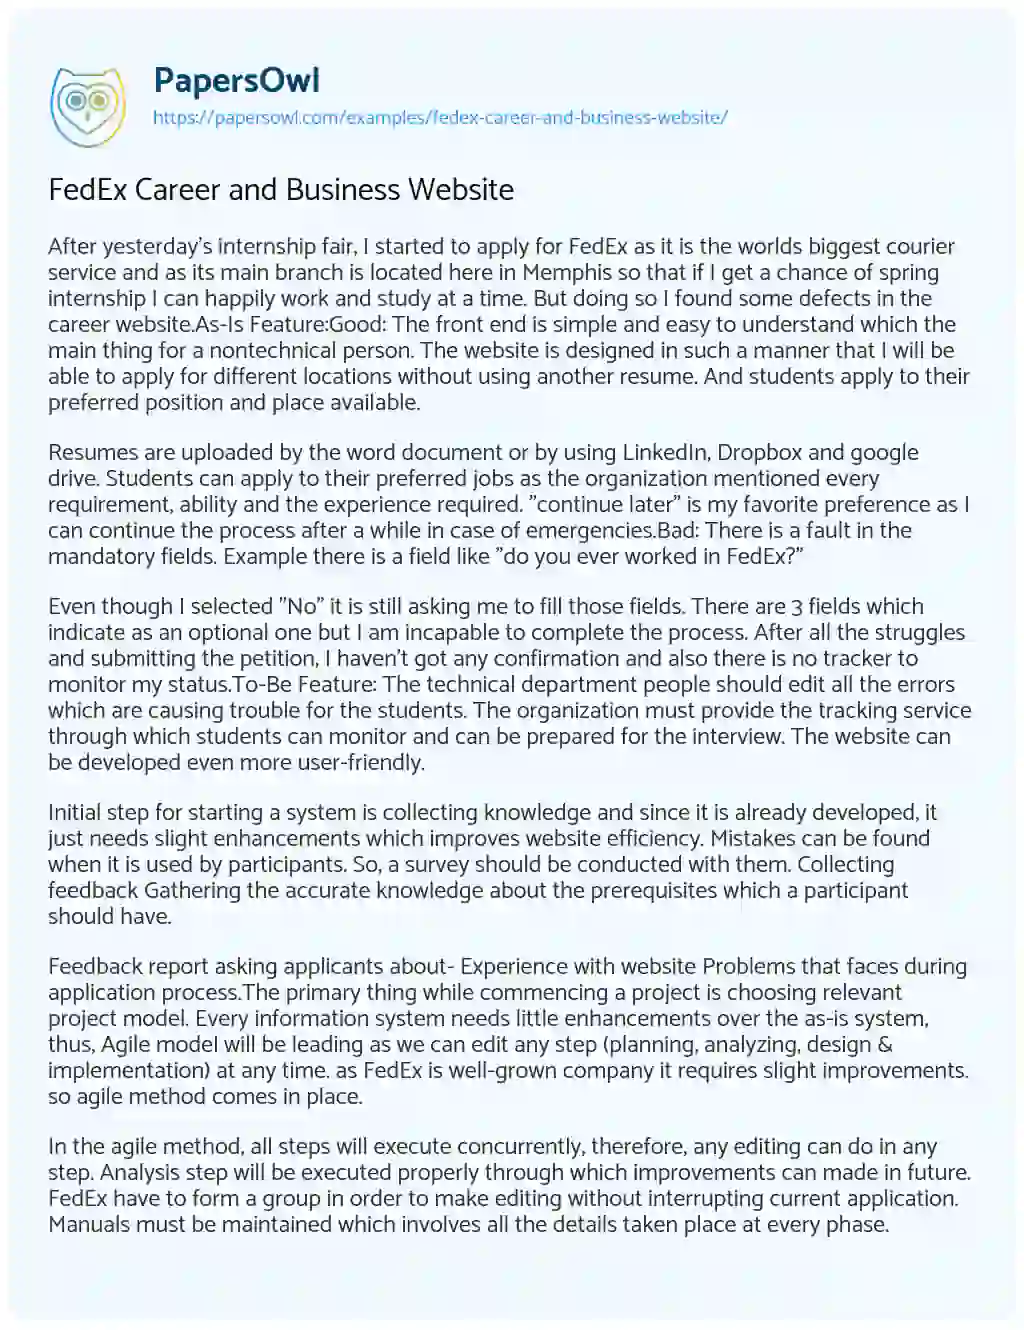 FedEx Career and Business Website essay